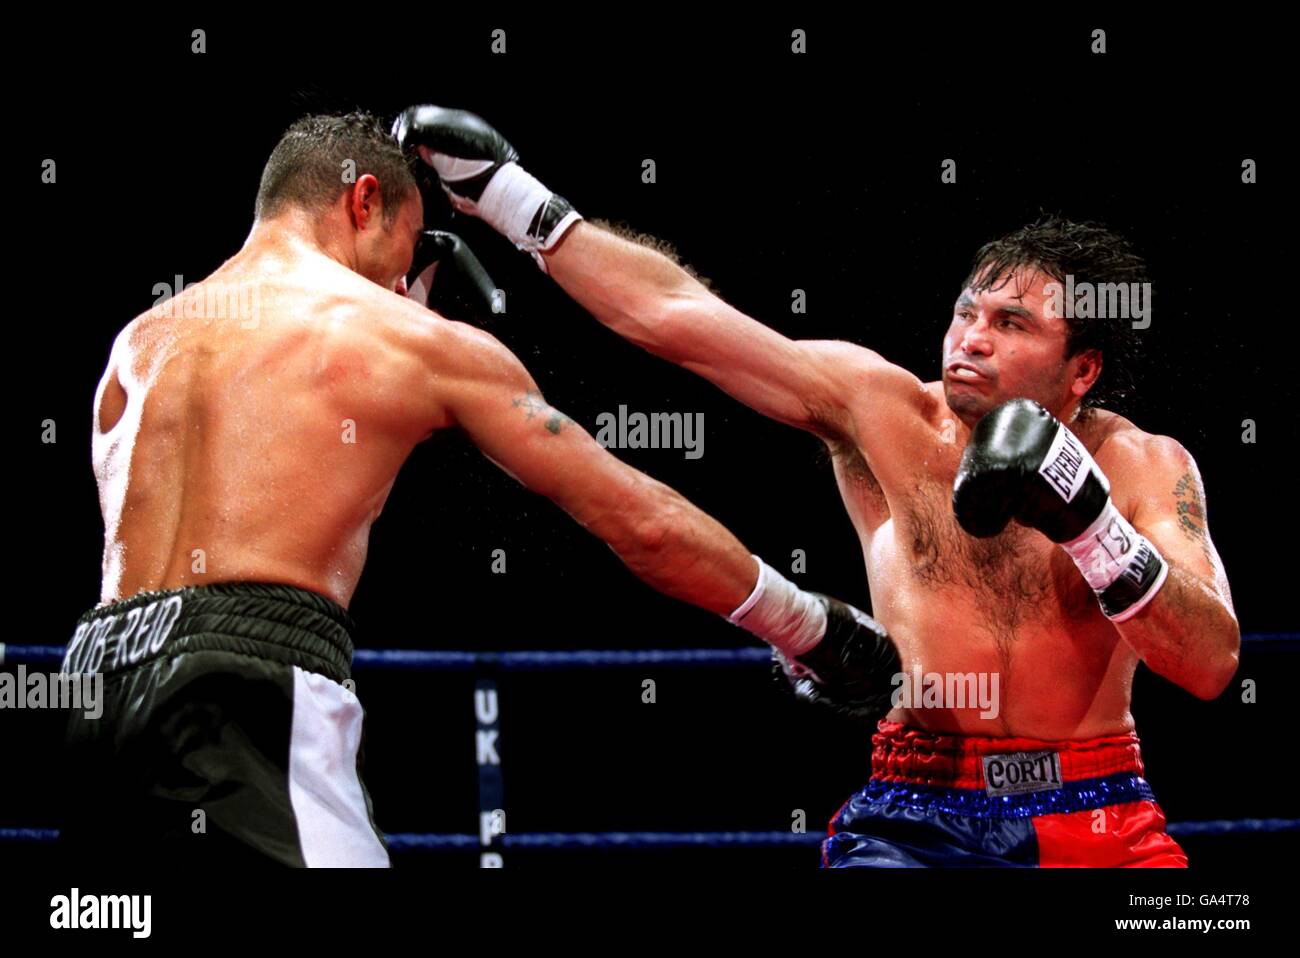 Boxing - Super Middleweight - Robin v Julio Cesar Vasquez Stock Photo - Alamy